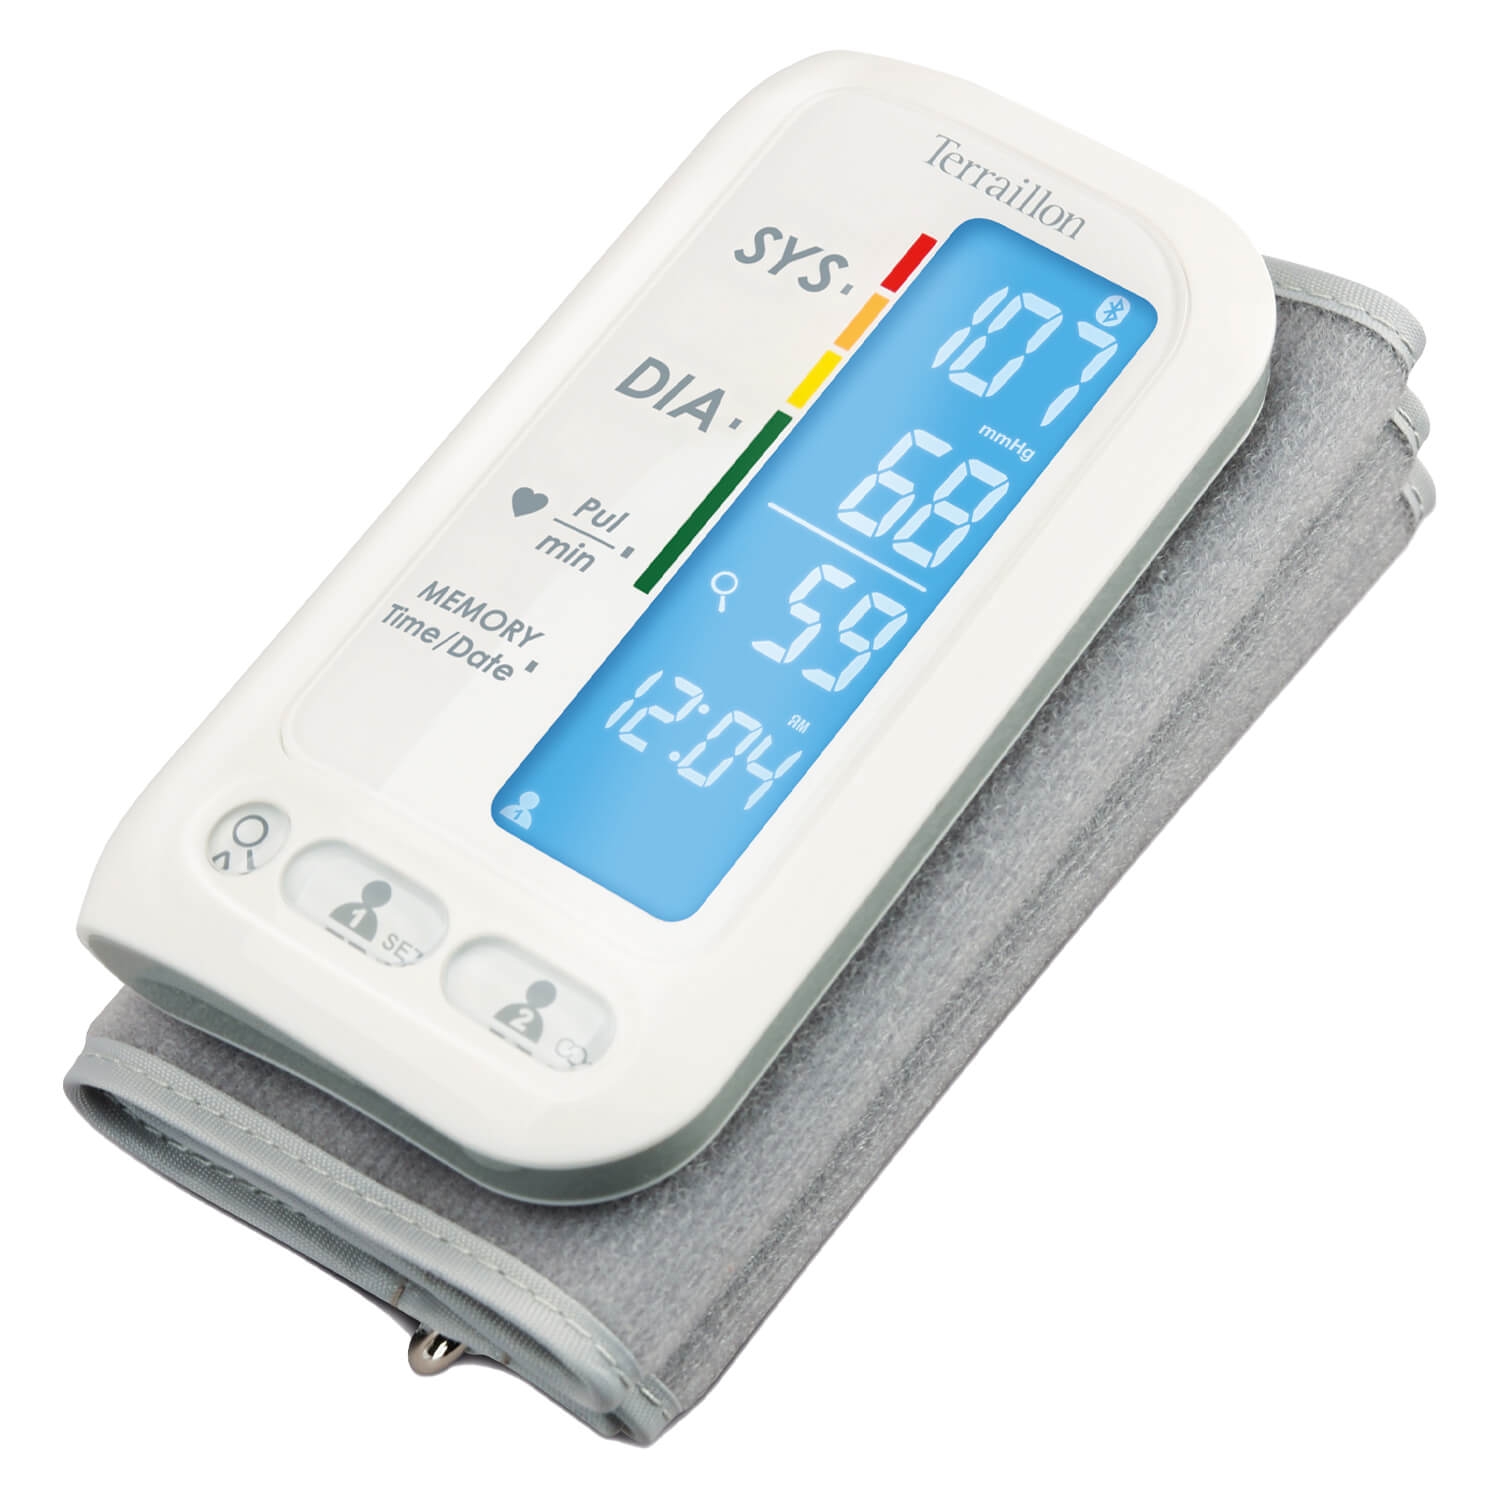 Product image from Terraillon - Tensio Bras vernetztes Armblutdruckgerät